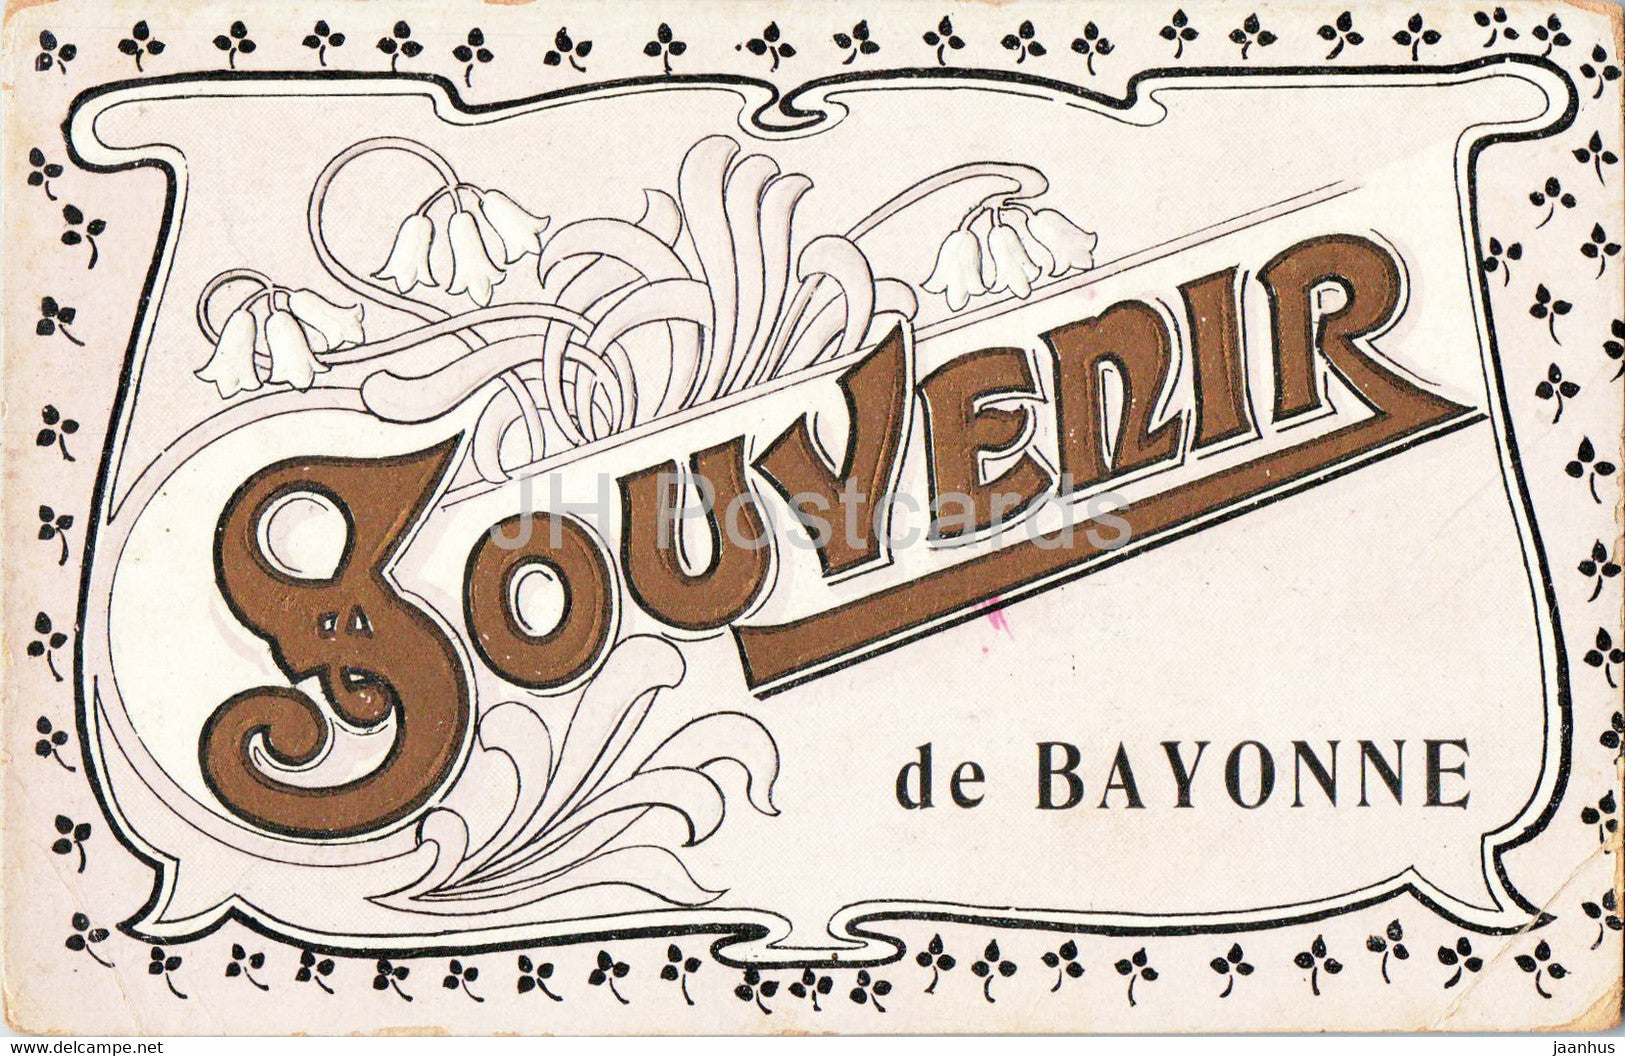 Souvenir de Bayonne - old postcard - 1914 - France - used - JH Postcards